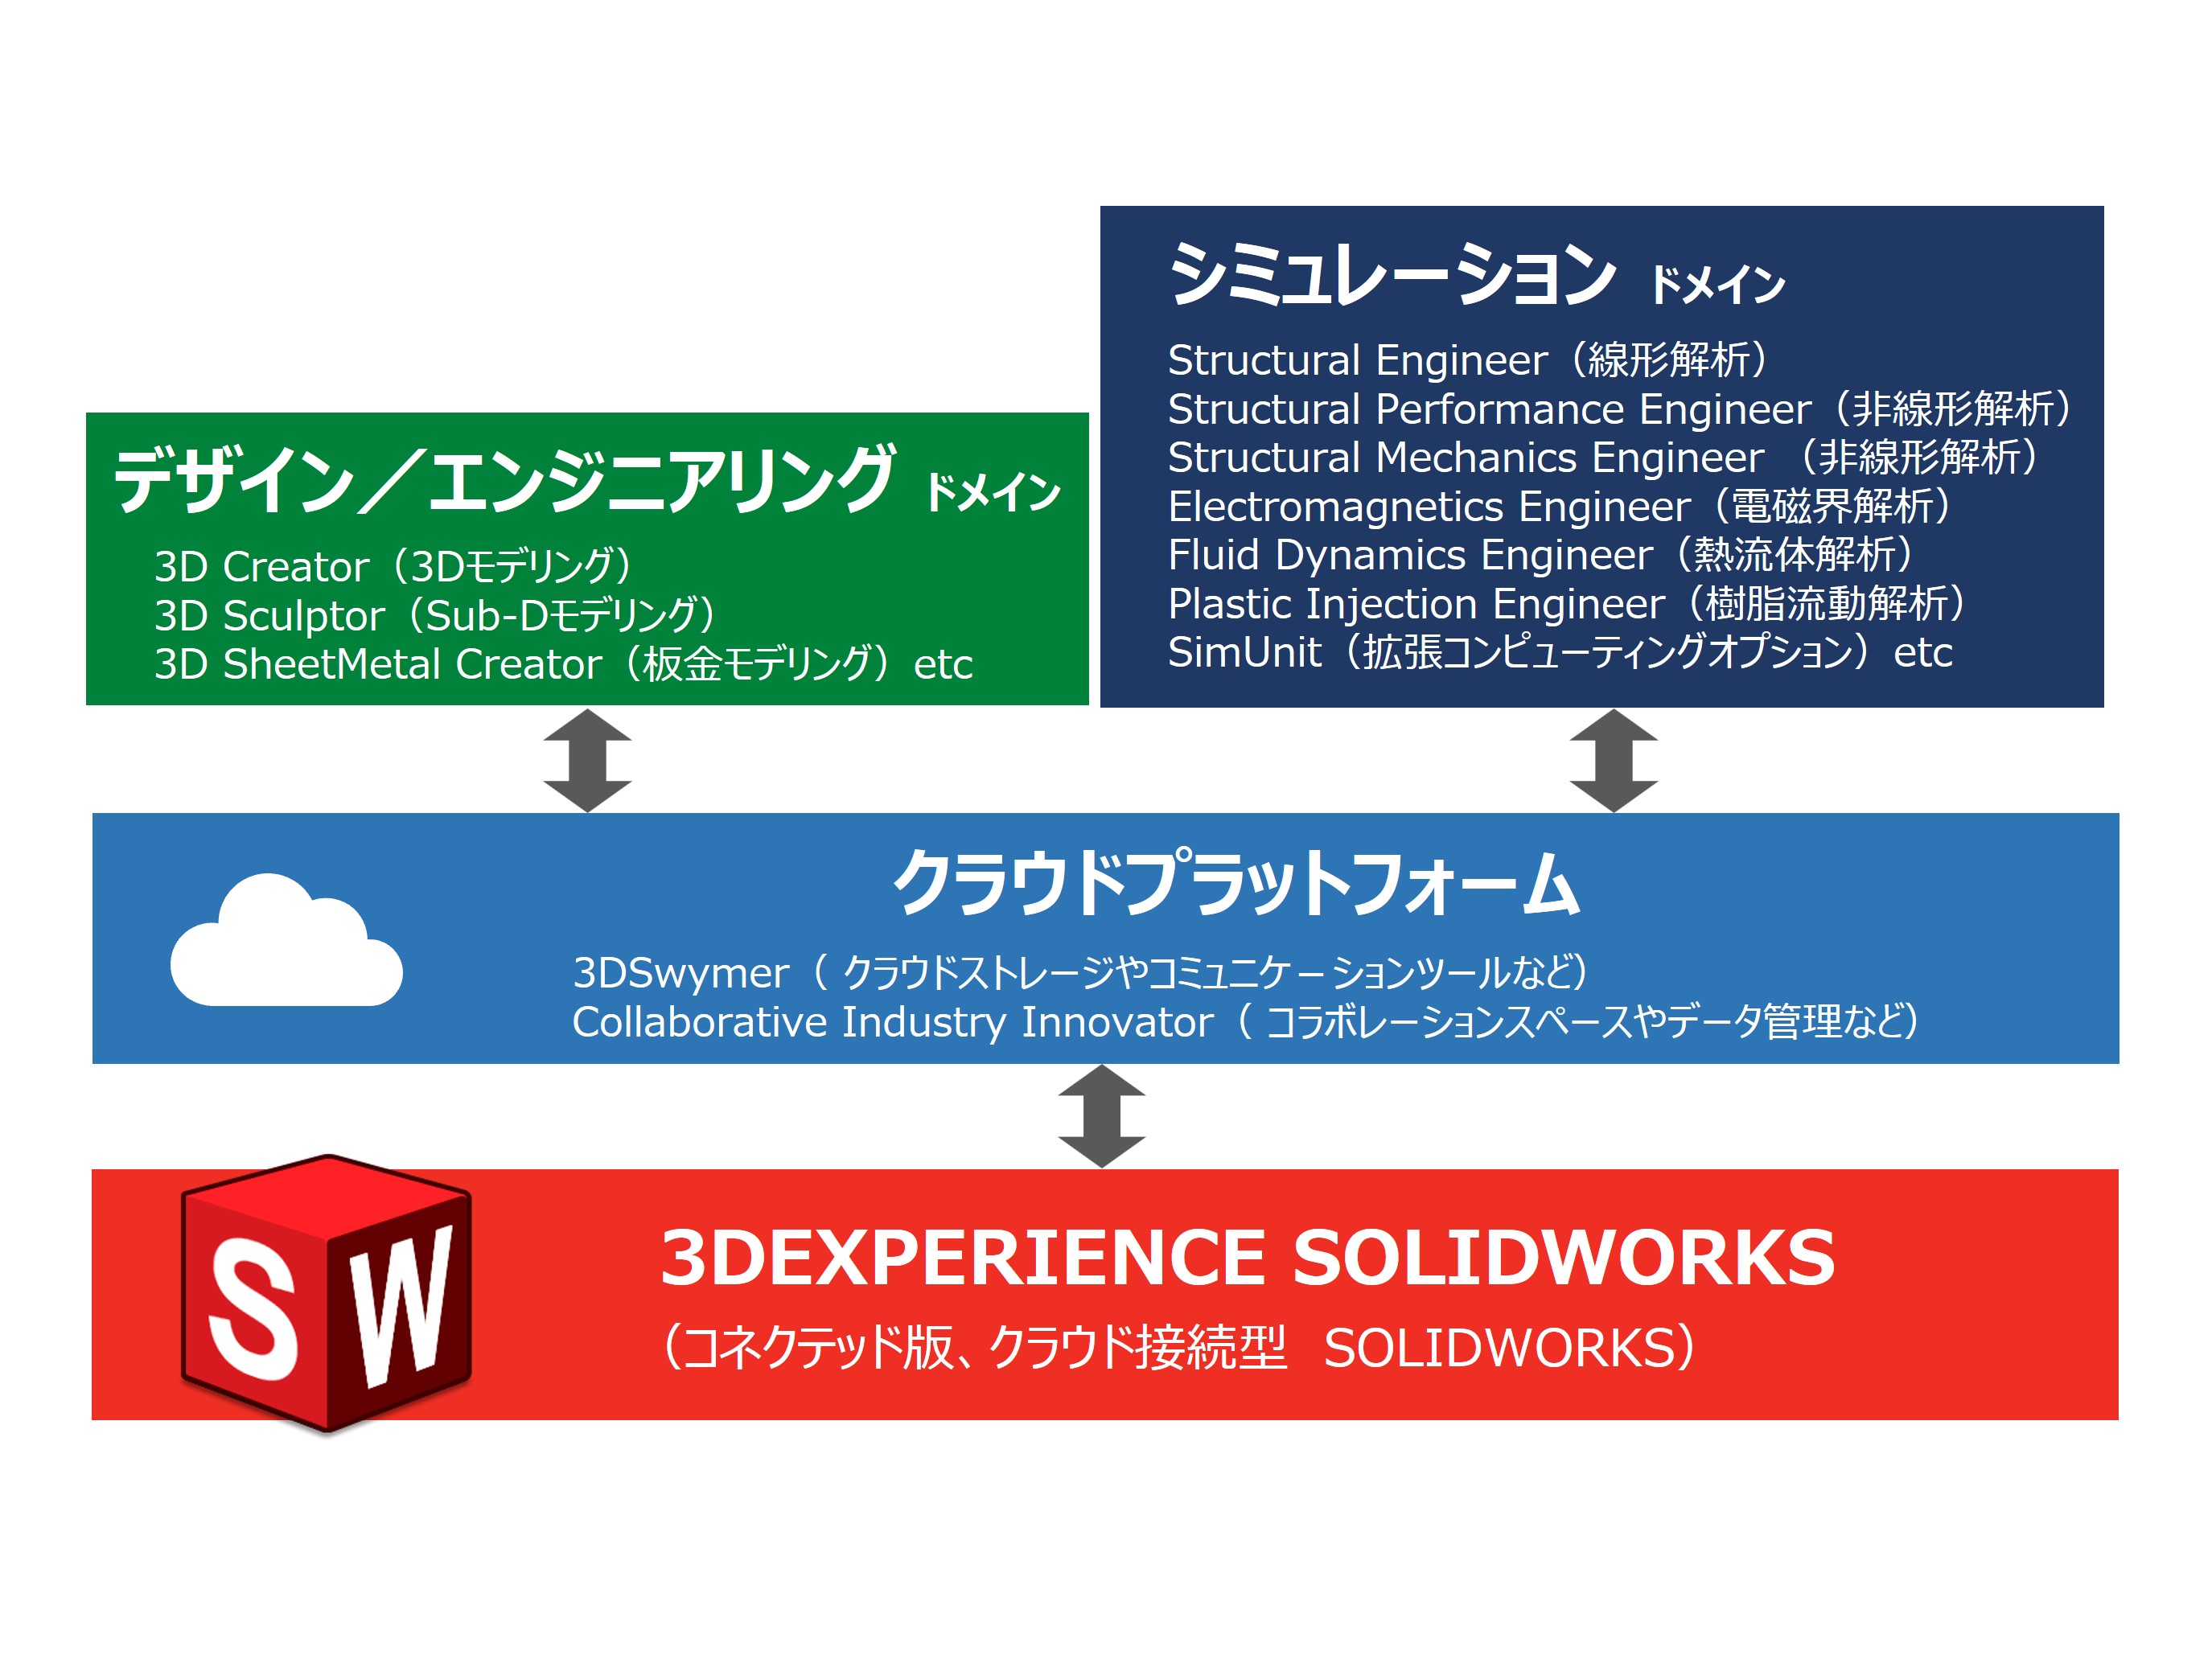 3DEXPERIENCE SOLIDWORKSと3DEXPERIENCE platformの関係